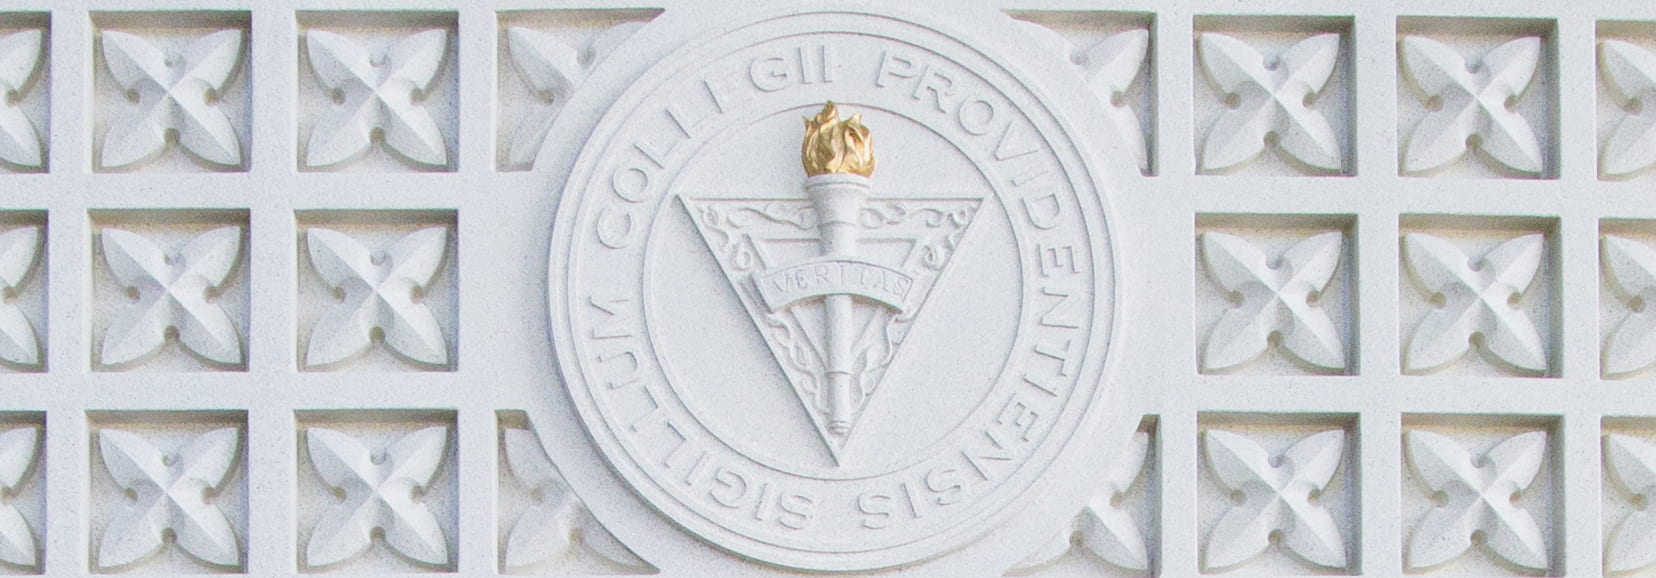 Ruane Seal, white cement with VERITAS logo